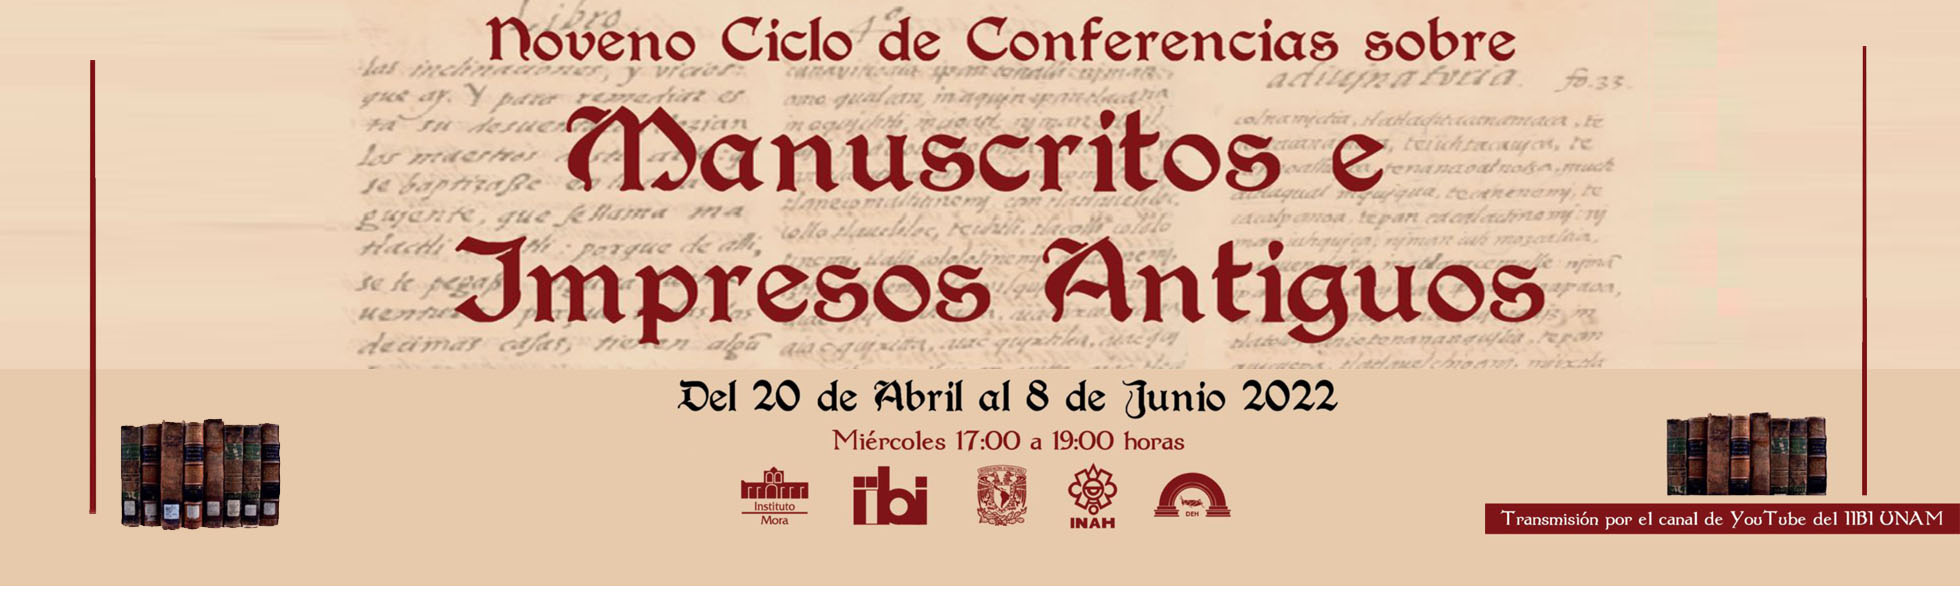 Noveno ciclo de conferencias sobre manuscritos e impresos antiguos